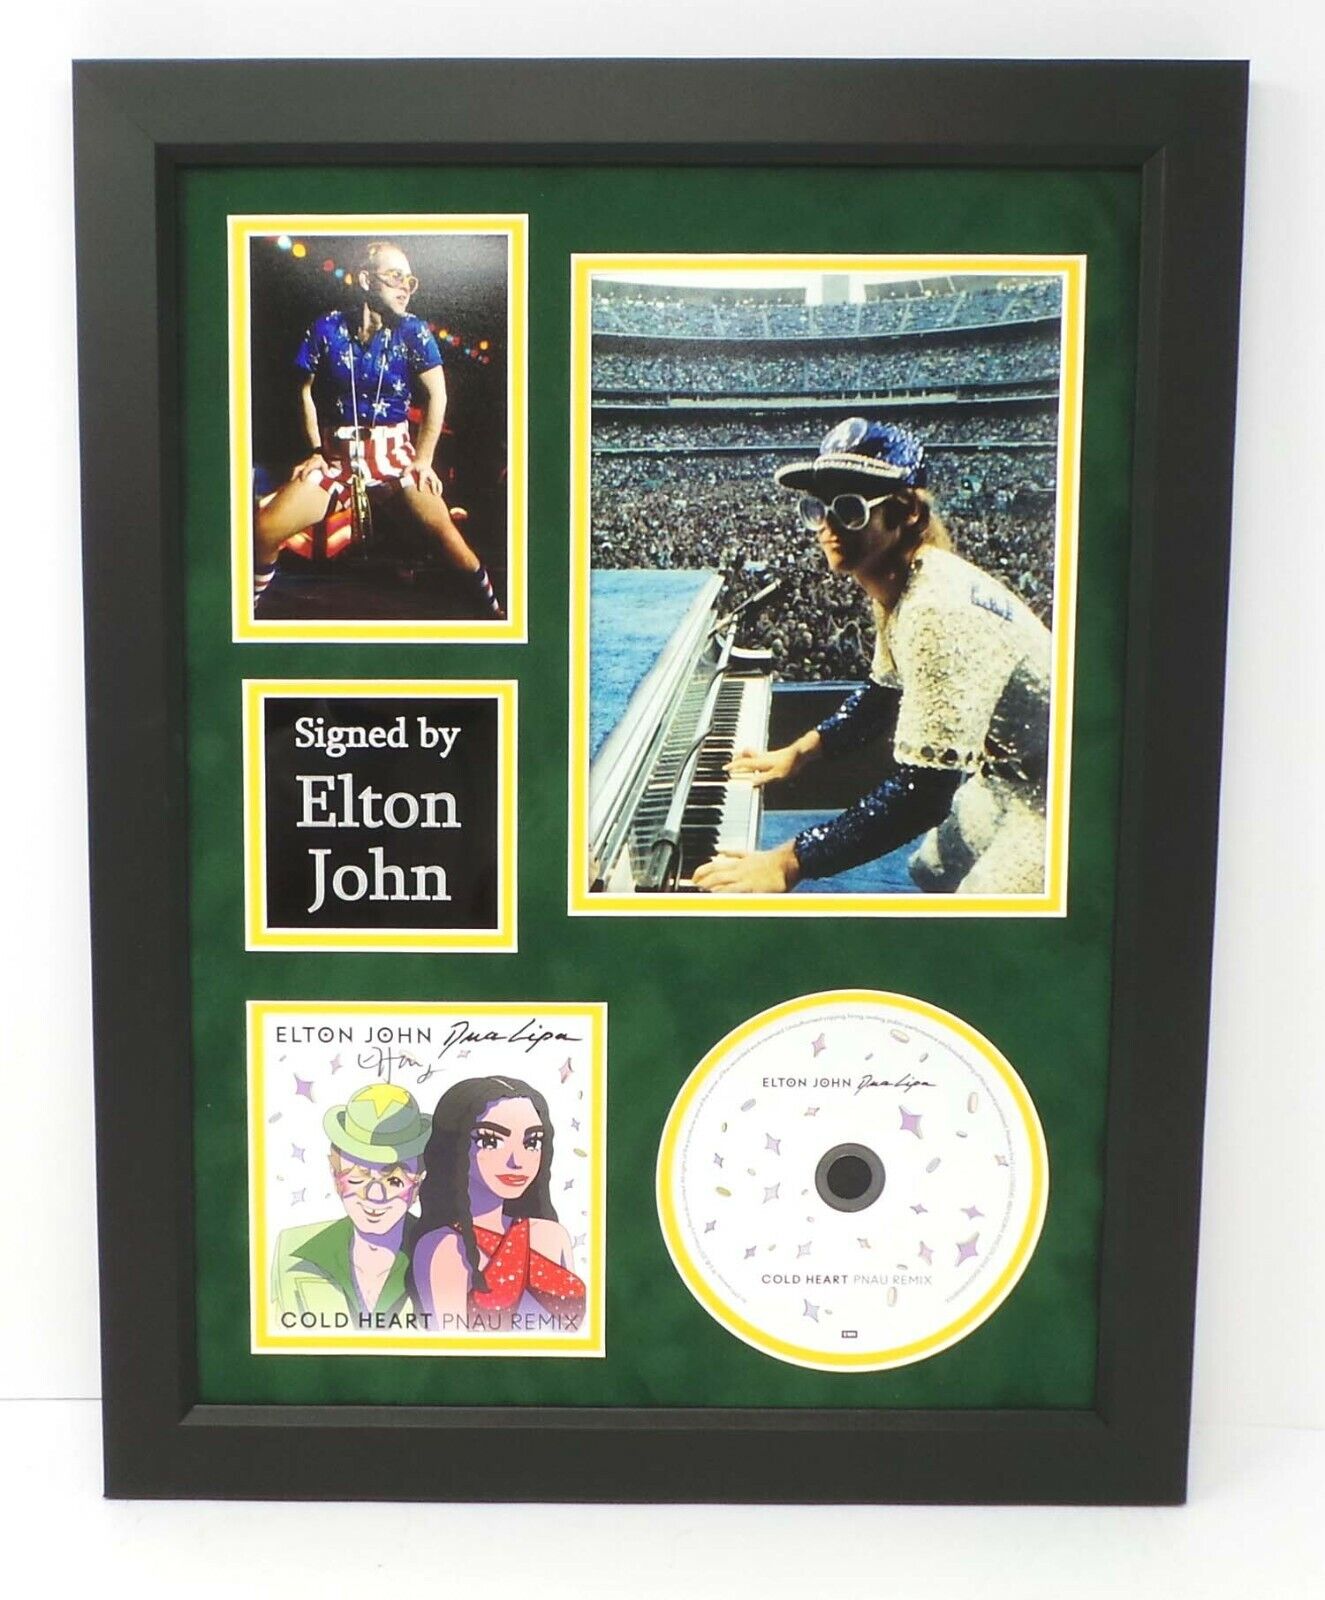 Elton JOHN Signed Mounted & Framed 16x12 CD Artcard Photo Poster painting Display 5 AFTAL RD COA